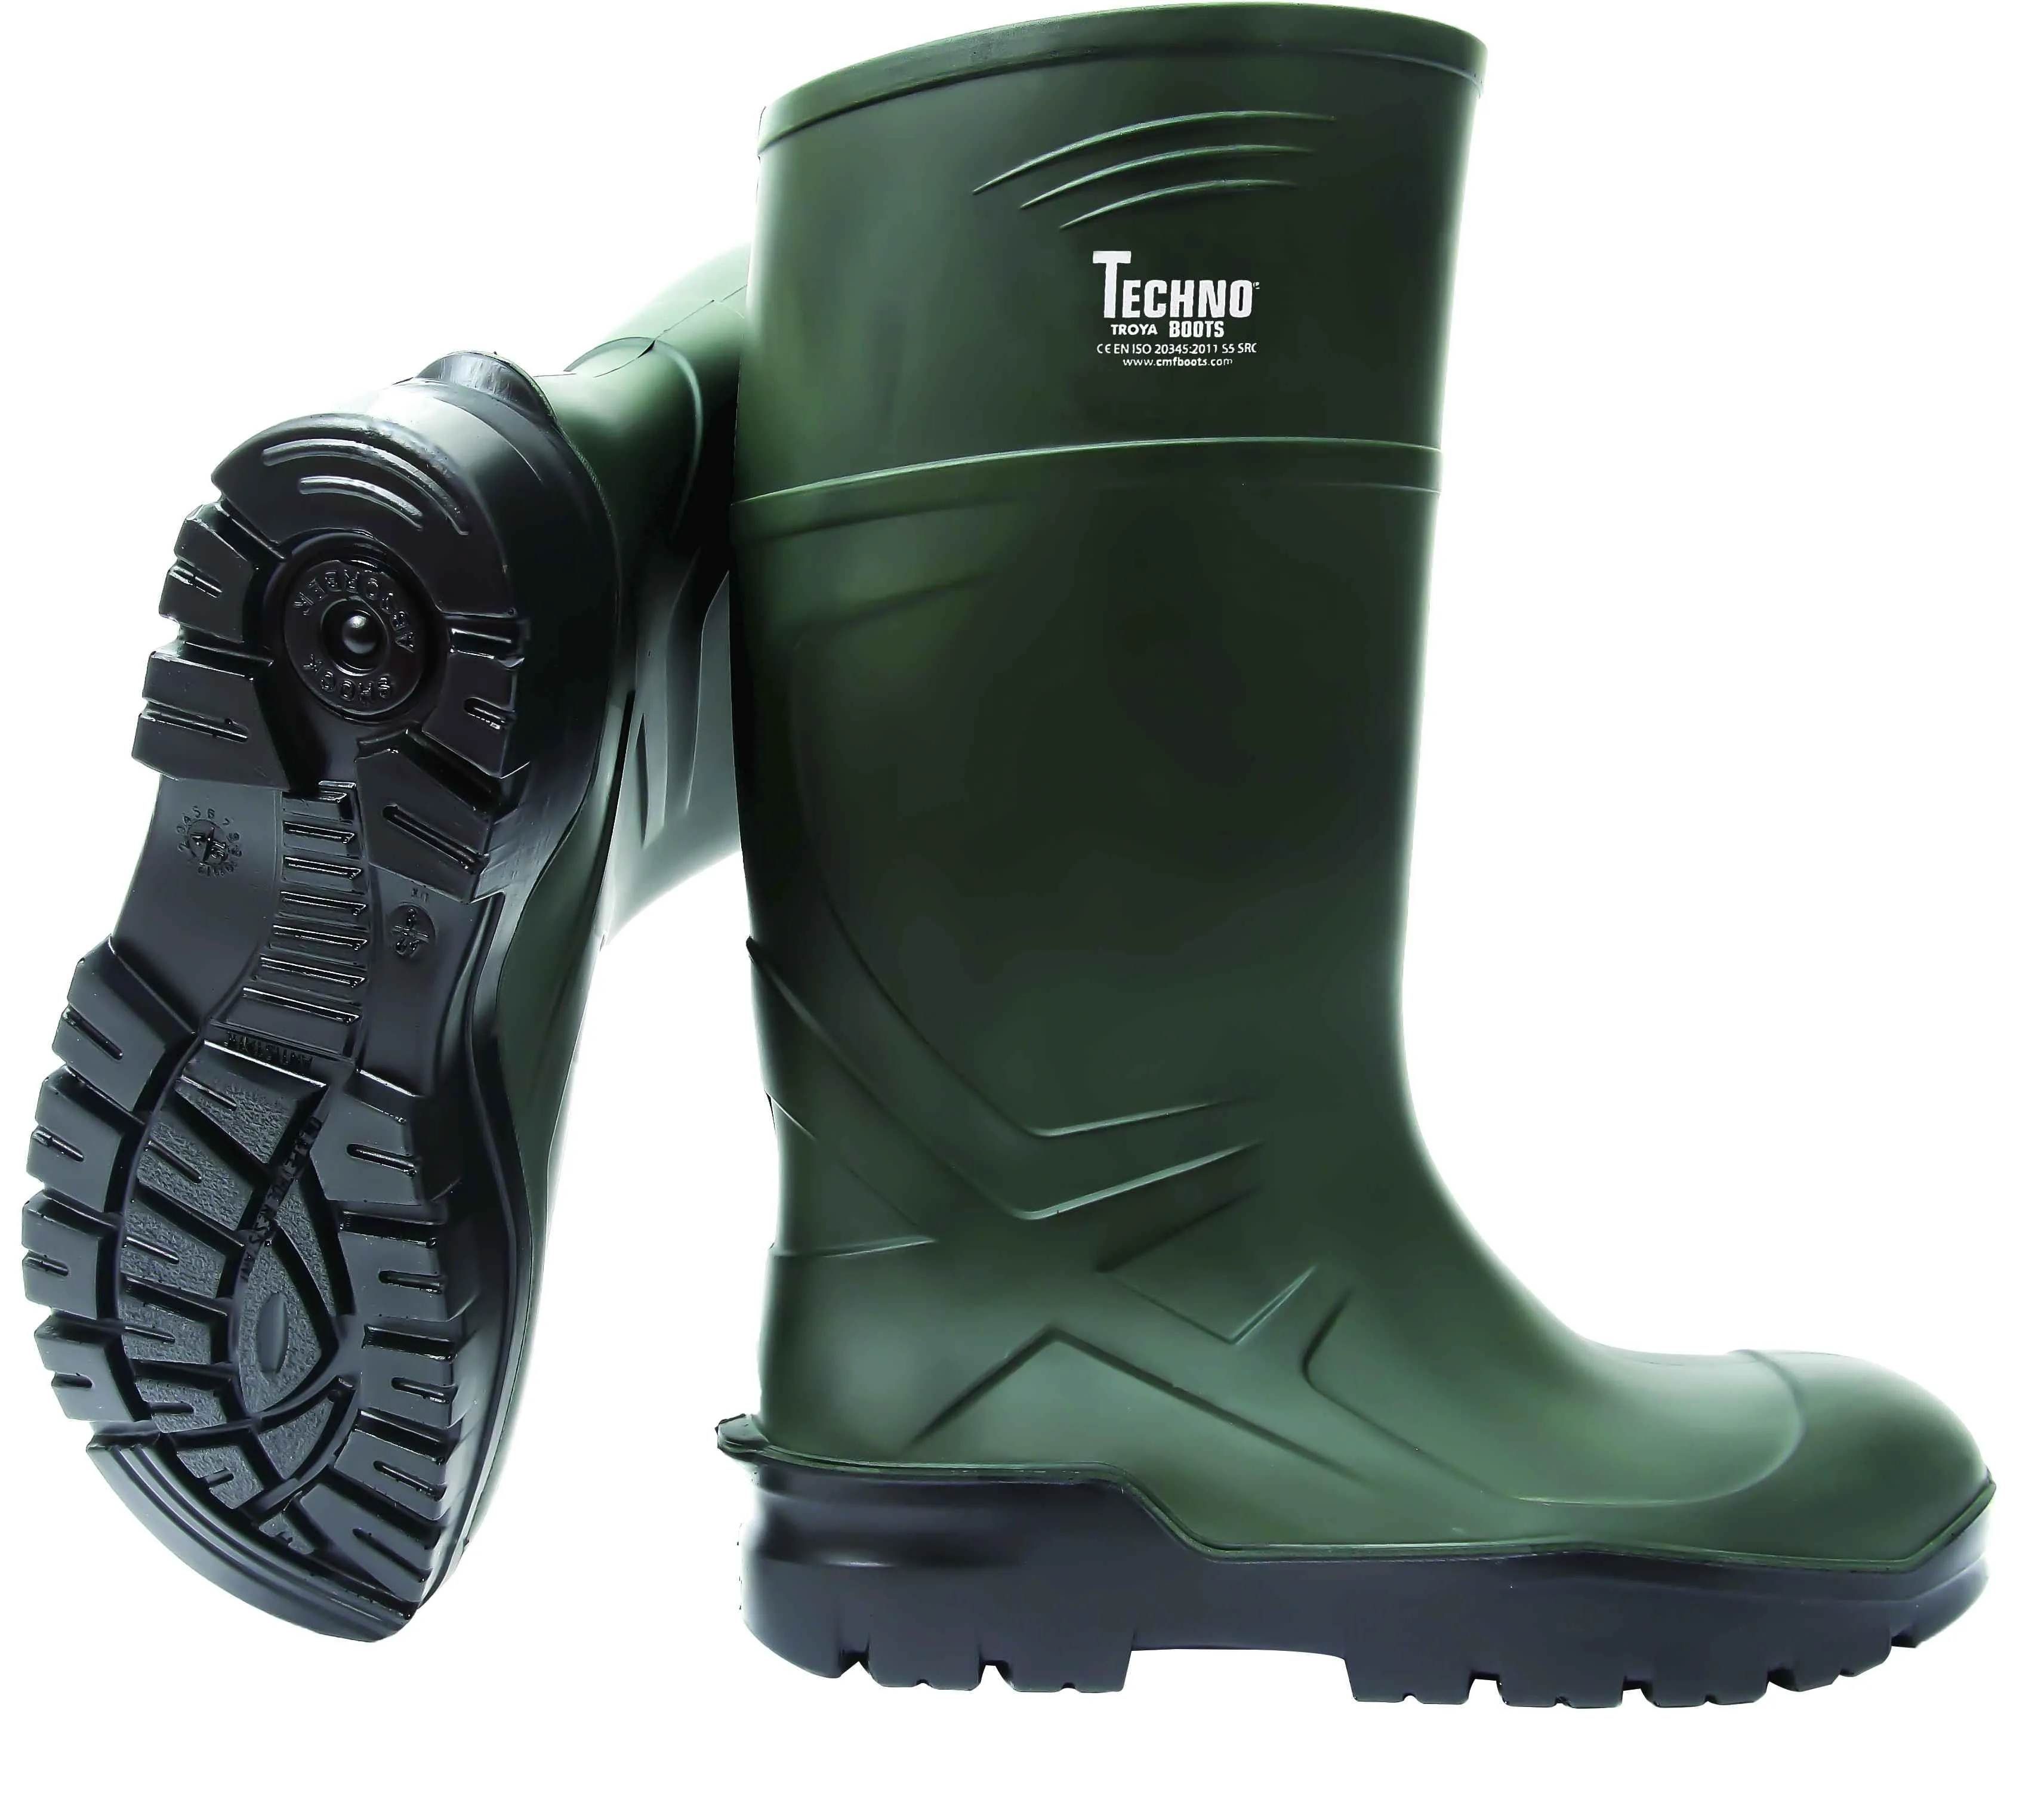 Techno Wellington Boots - Steel Toe - Full safety 